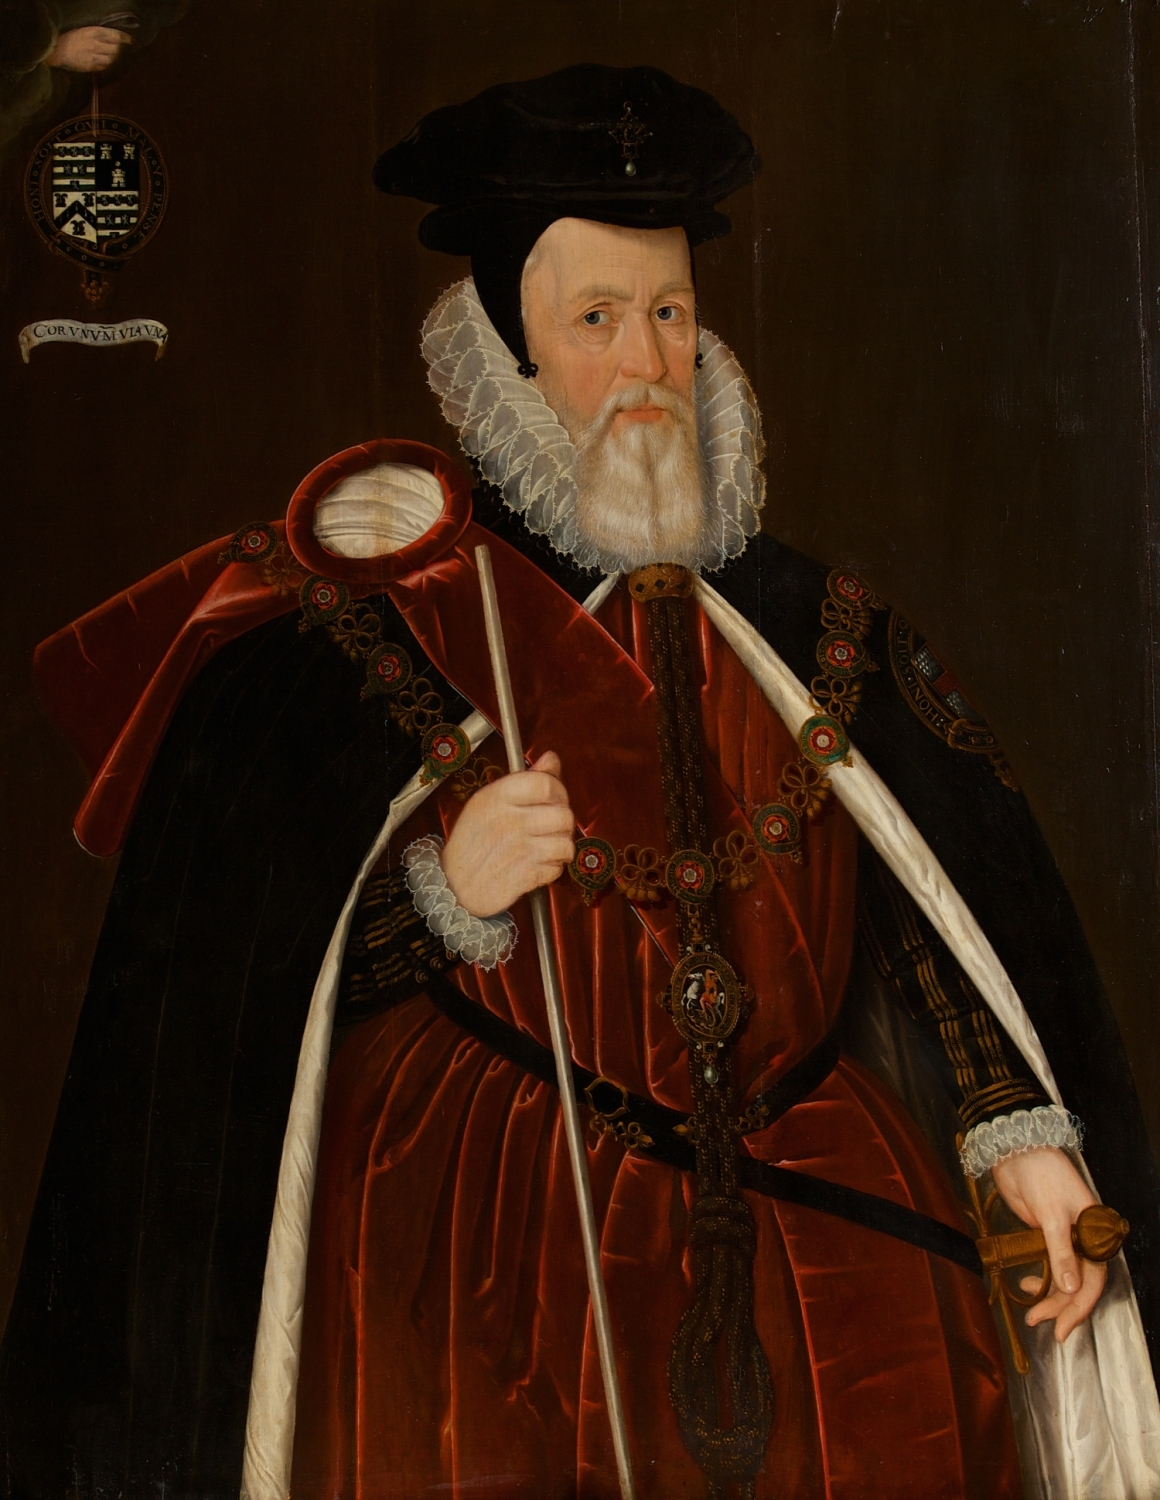 Sir William Cecil, 1st Baron Burghley